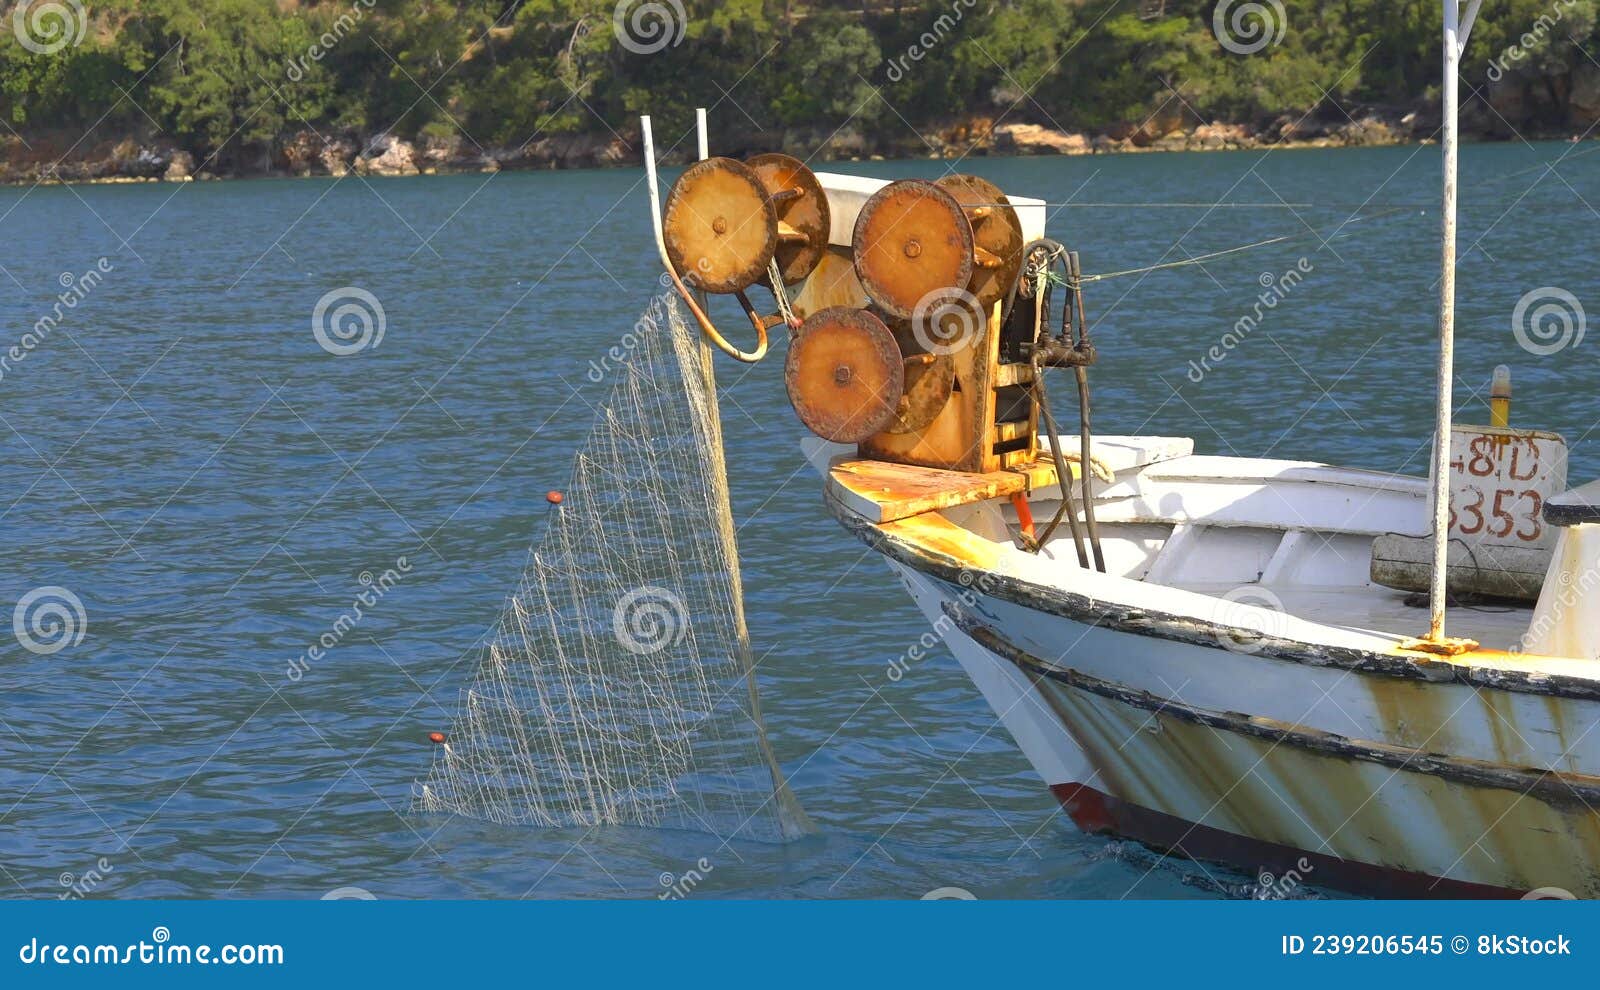 https://thumbs.dreamstime.com/z/net-reel-small-fishing-boat-pulling-net-net-reel-small-fishing-boat-pulling-net-nylon-fishing-net-float-line-attached-239206545.jpg